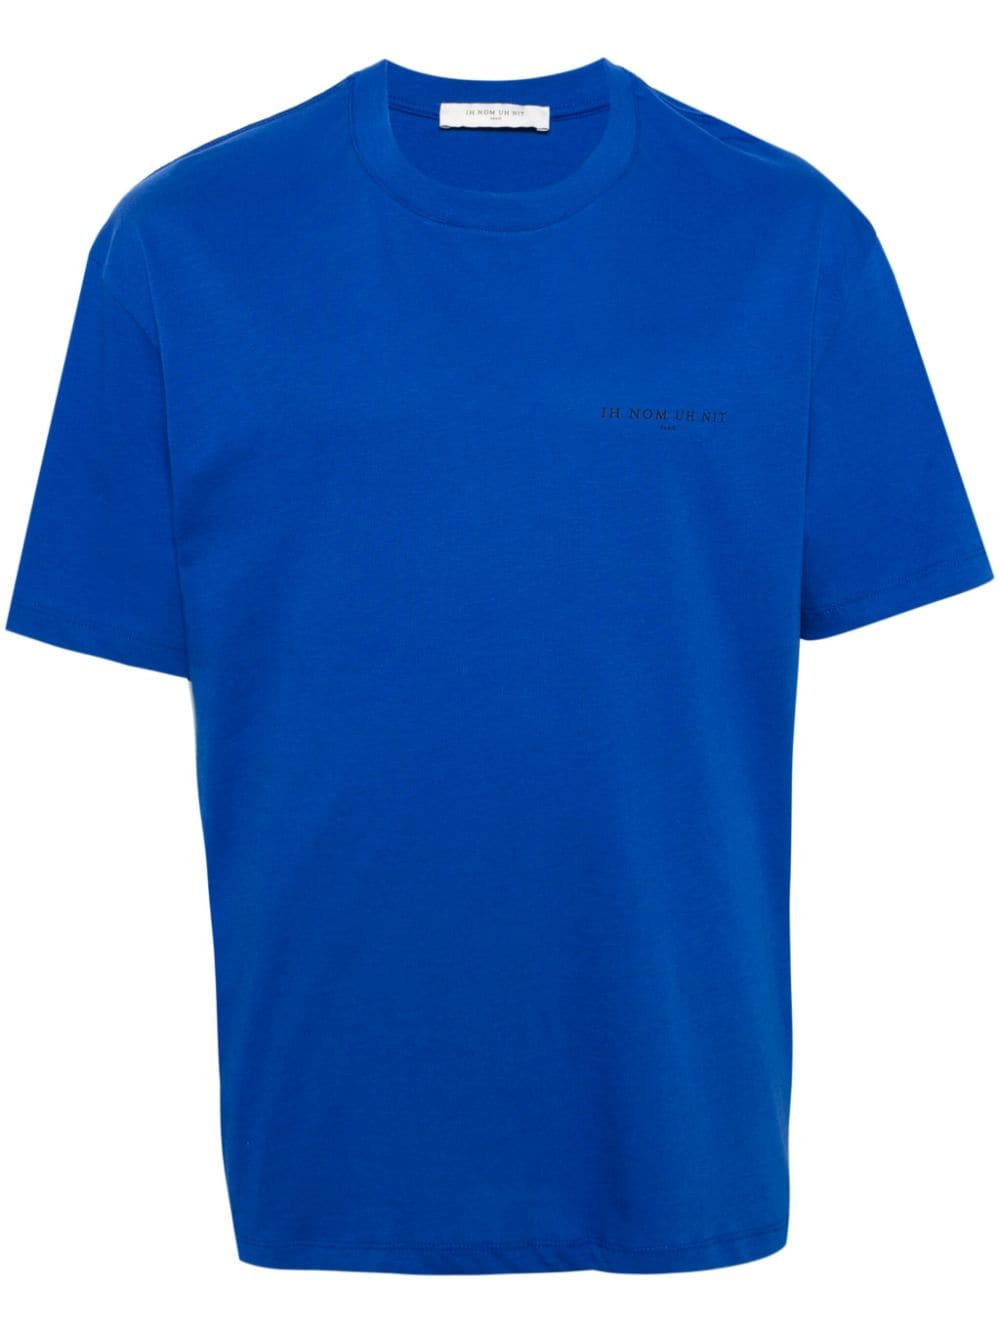 Royal blue T-shirt with logo writing